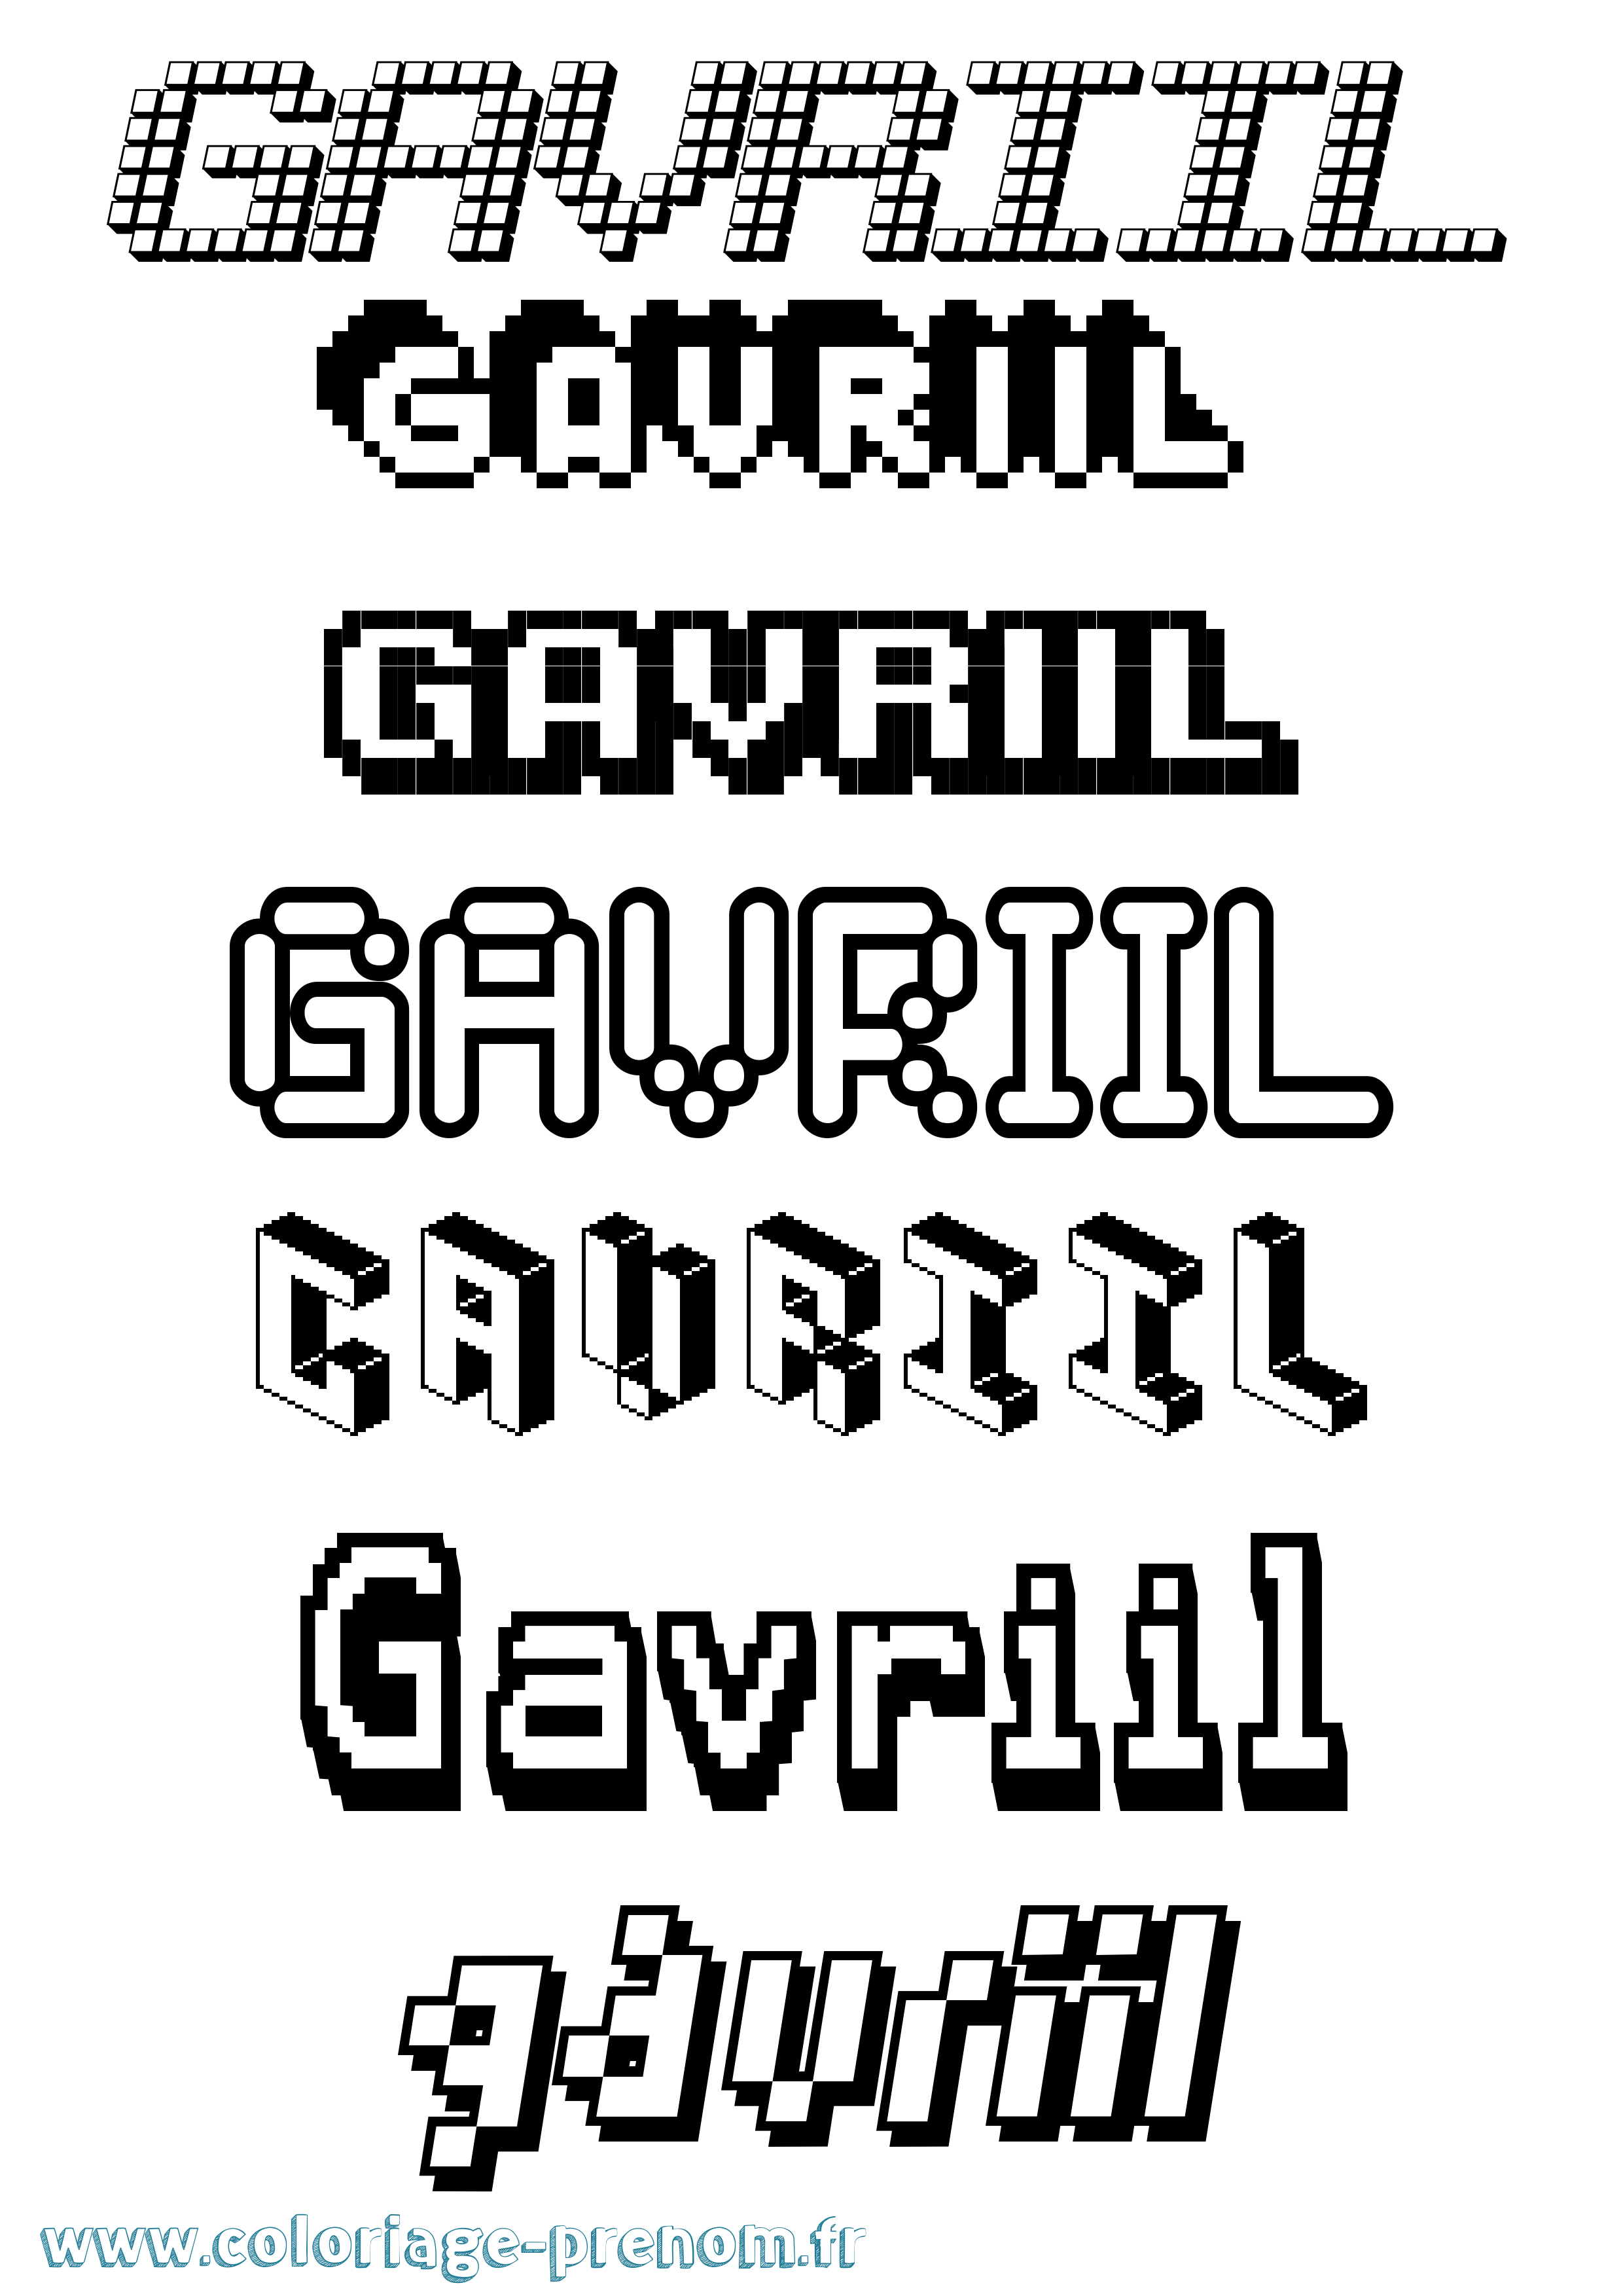 Coloriage prénom Gavriil Pixel